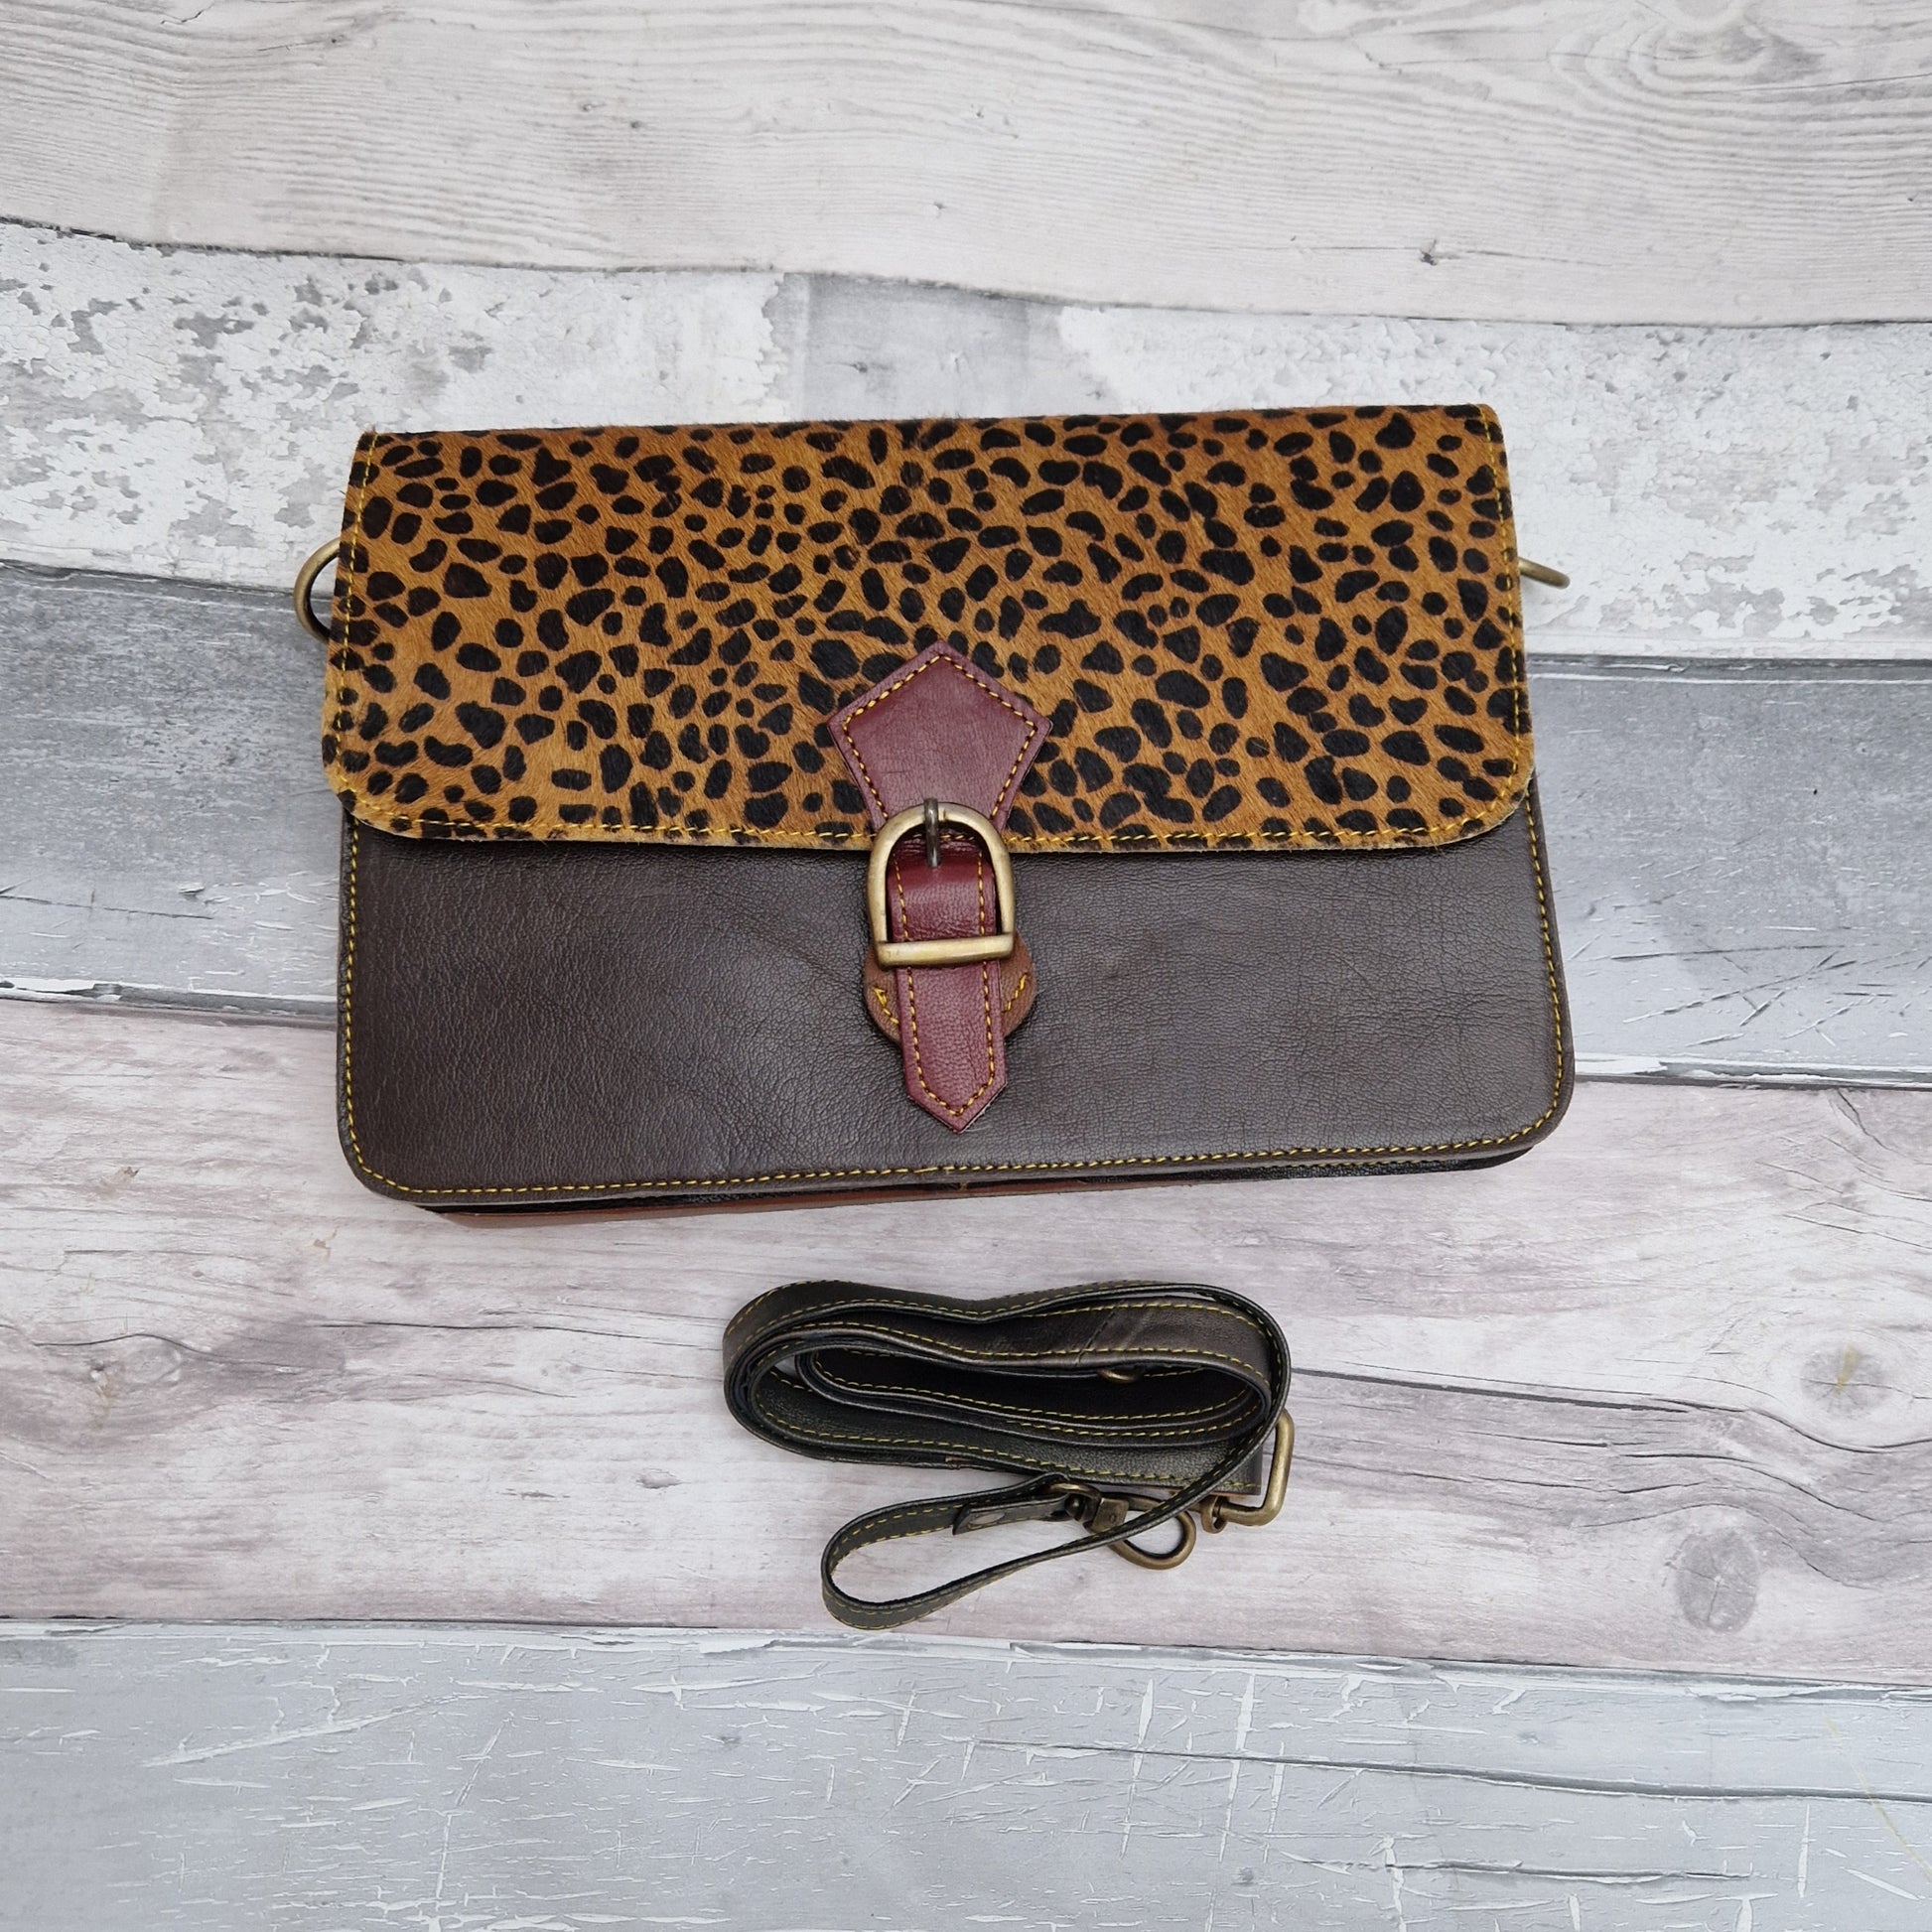 Dark Brown Leather handbag with a textured Cheetah print panel.